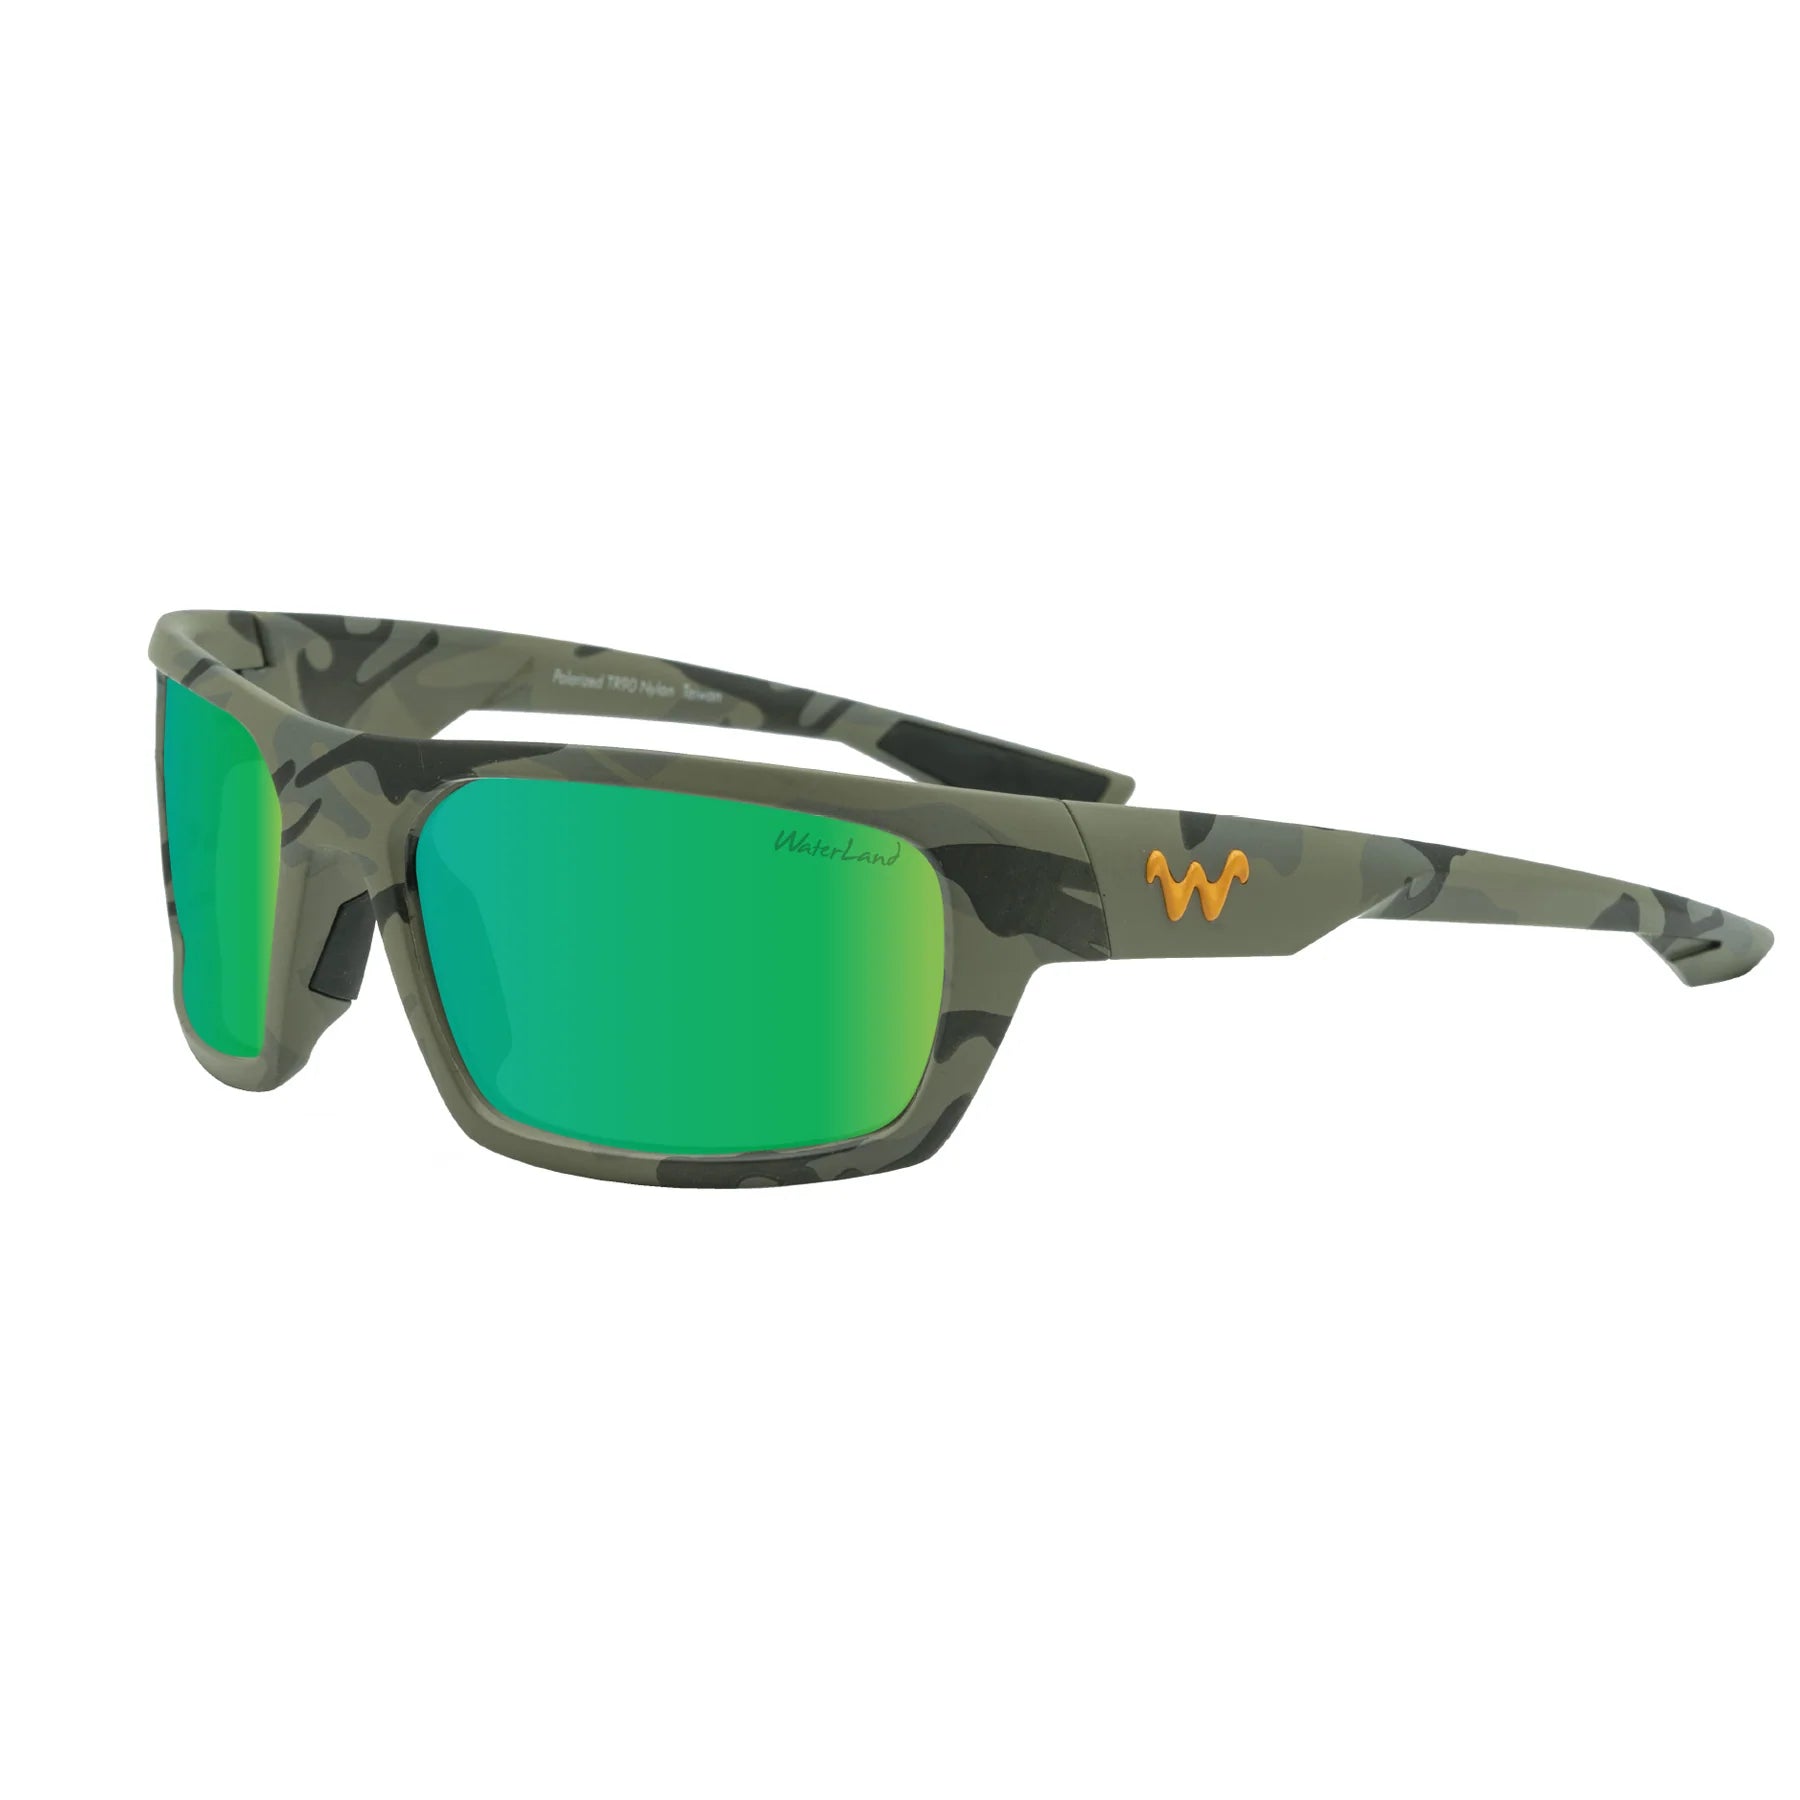 Waterland Milliken Sunglasses PolyCarbonate / Black / Silver Mirror